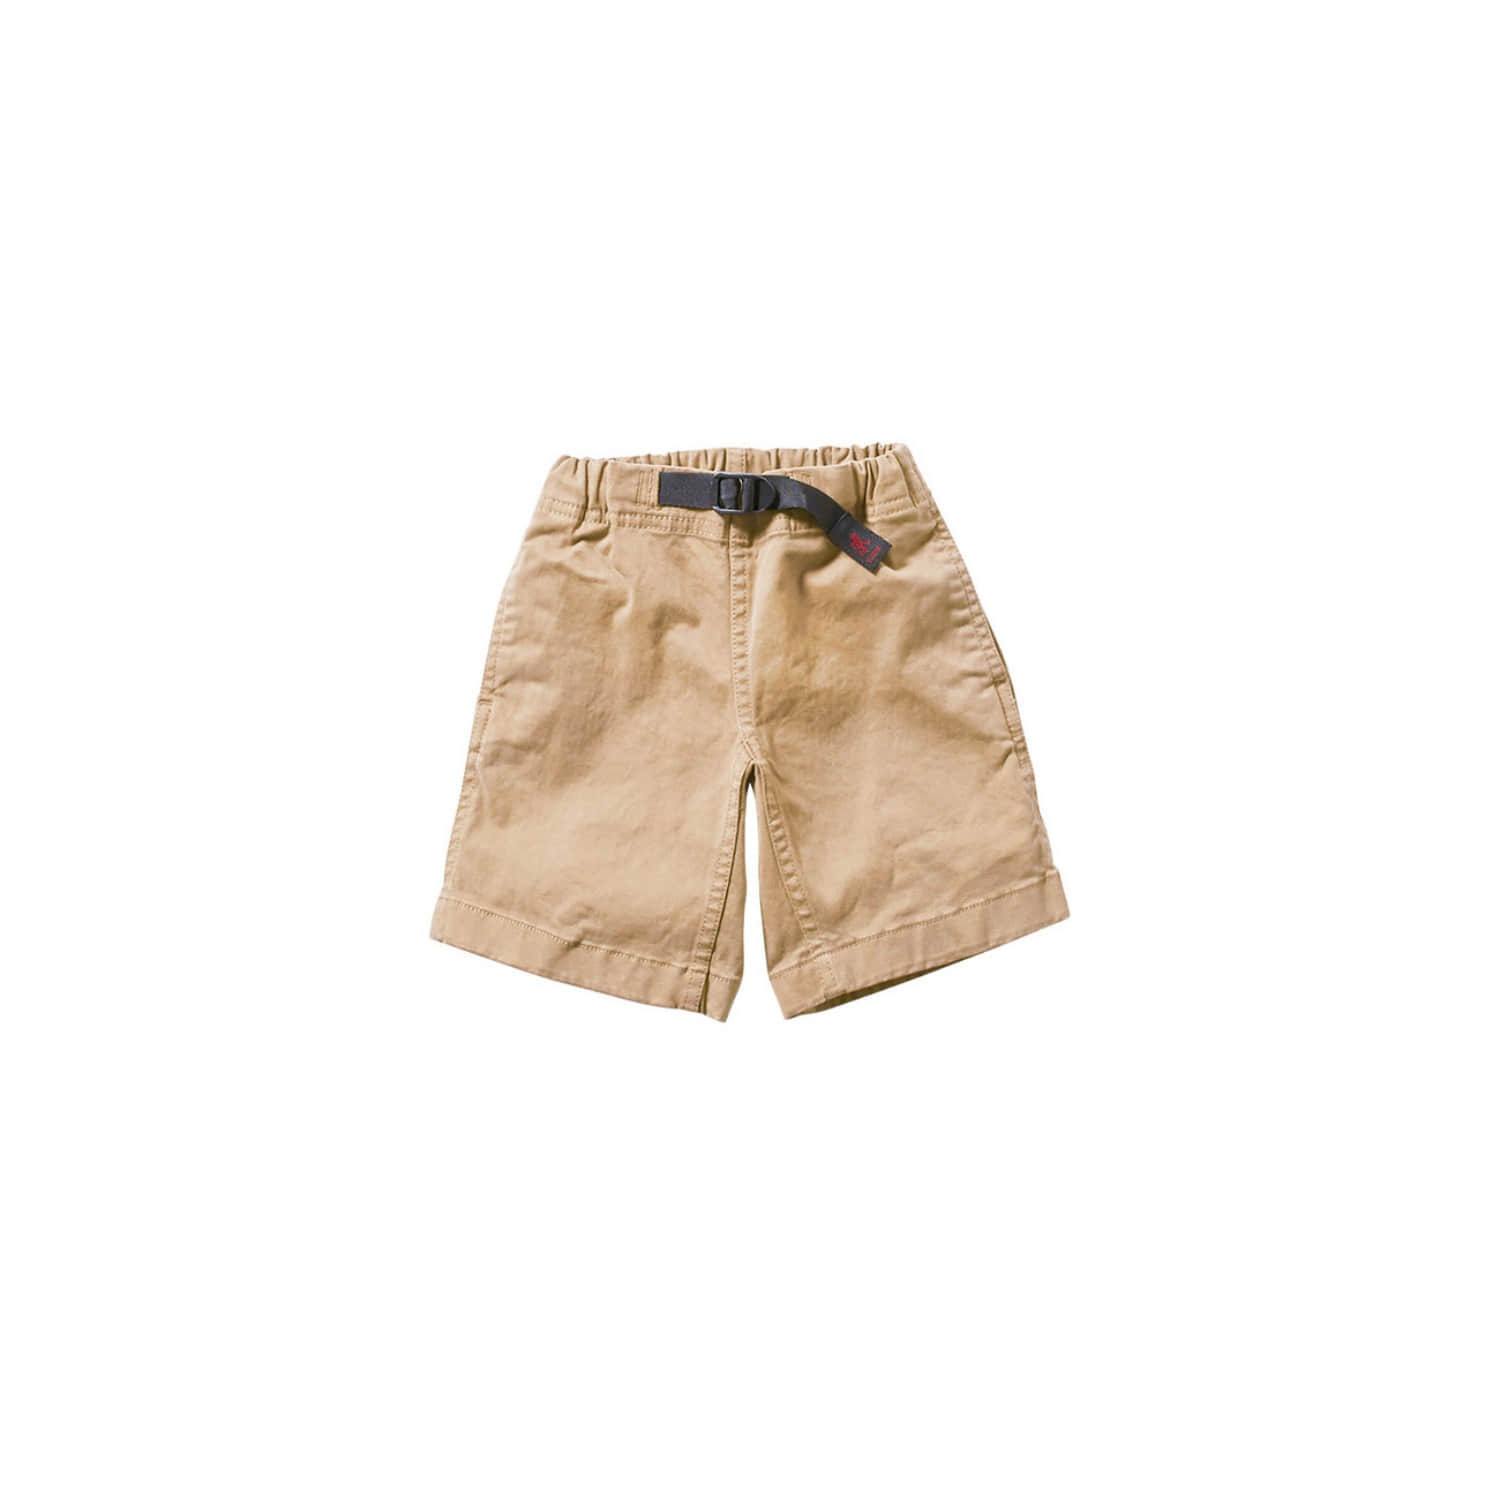 Kids G-Shorts - 3size, 그라미치 키즈 G 쇼츠 (-30%)